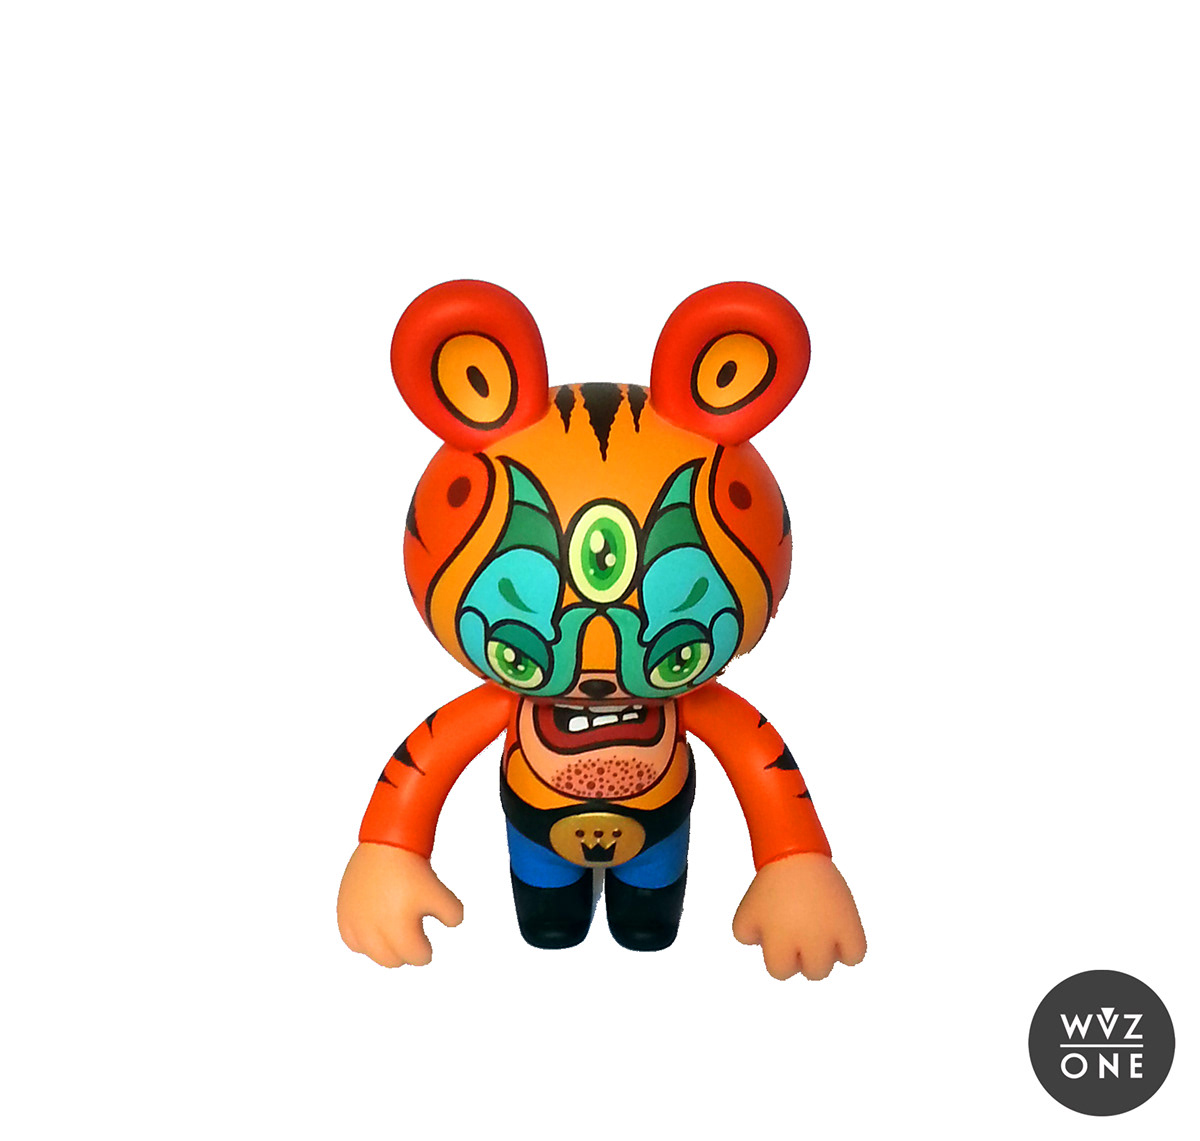 Wuzone Custom Dunny Munny luchabear itokinpark Kidrobot kaiju DIY vinyltoy artoy toy geek collectible tiger